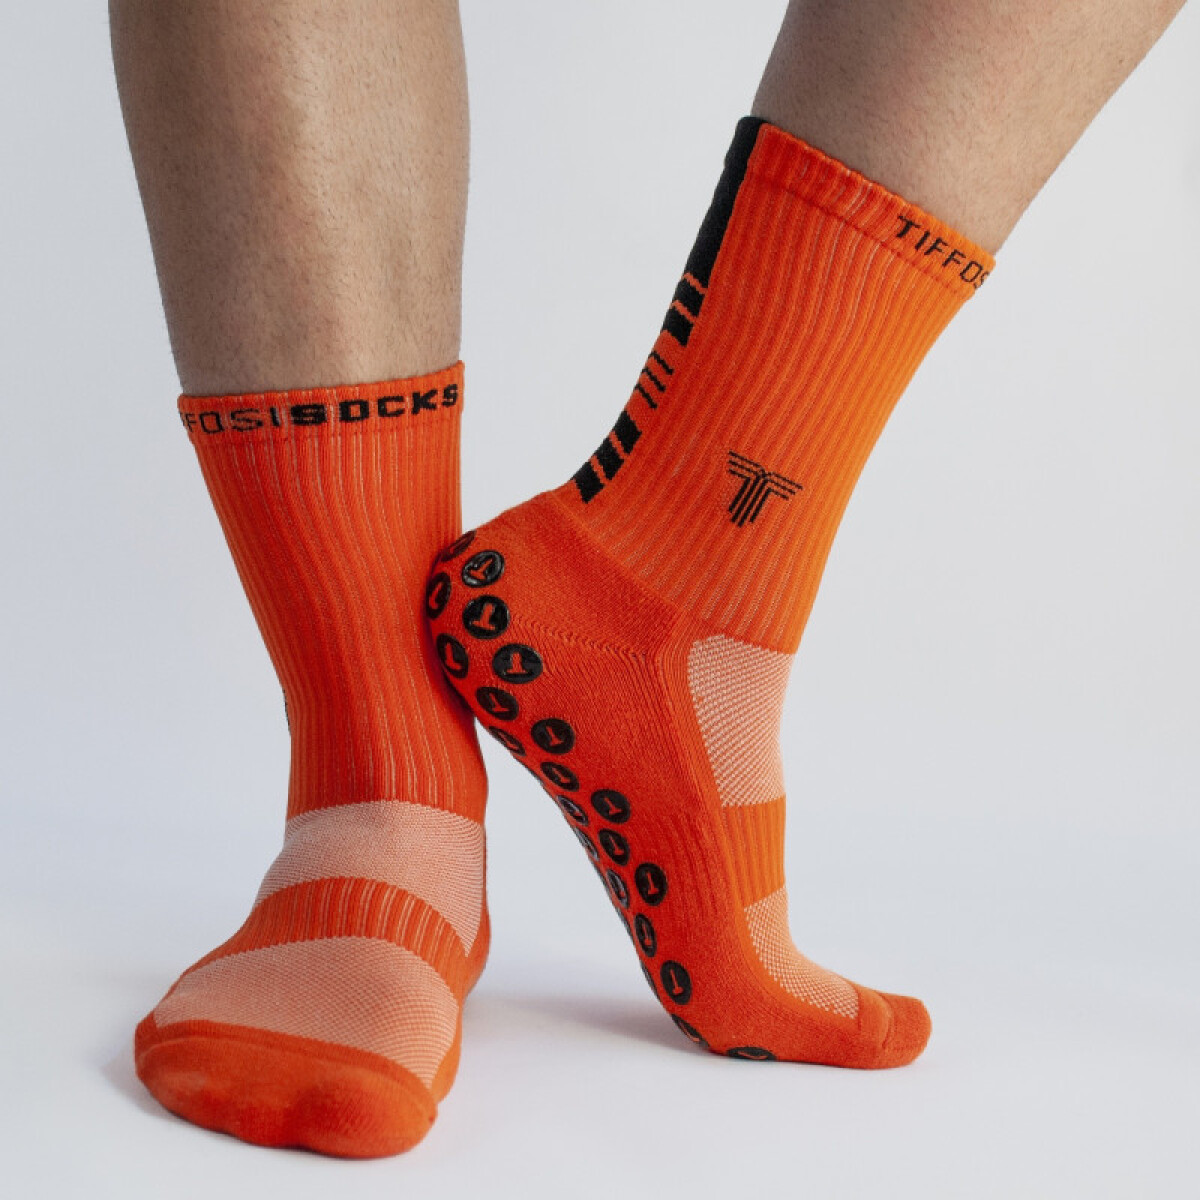 Media Tiffosi Futbol Adulto Socks Naranja - Color Único 